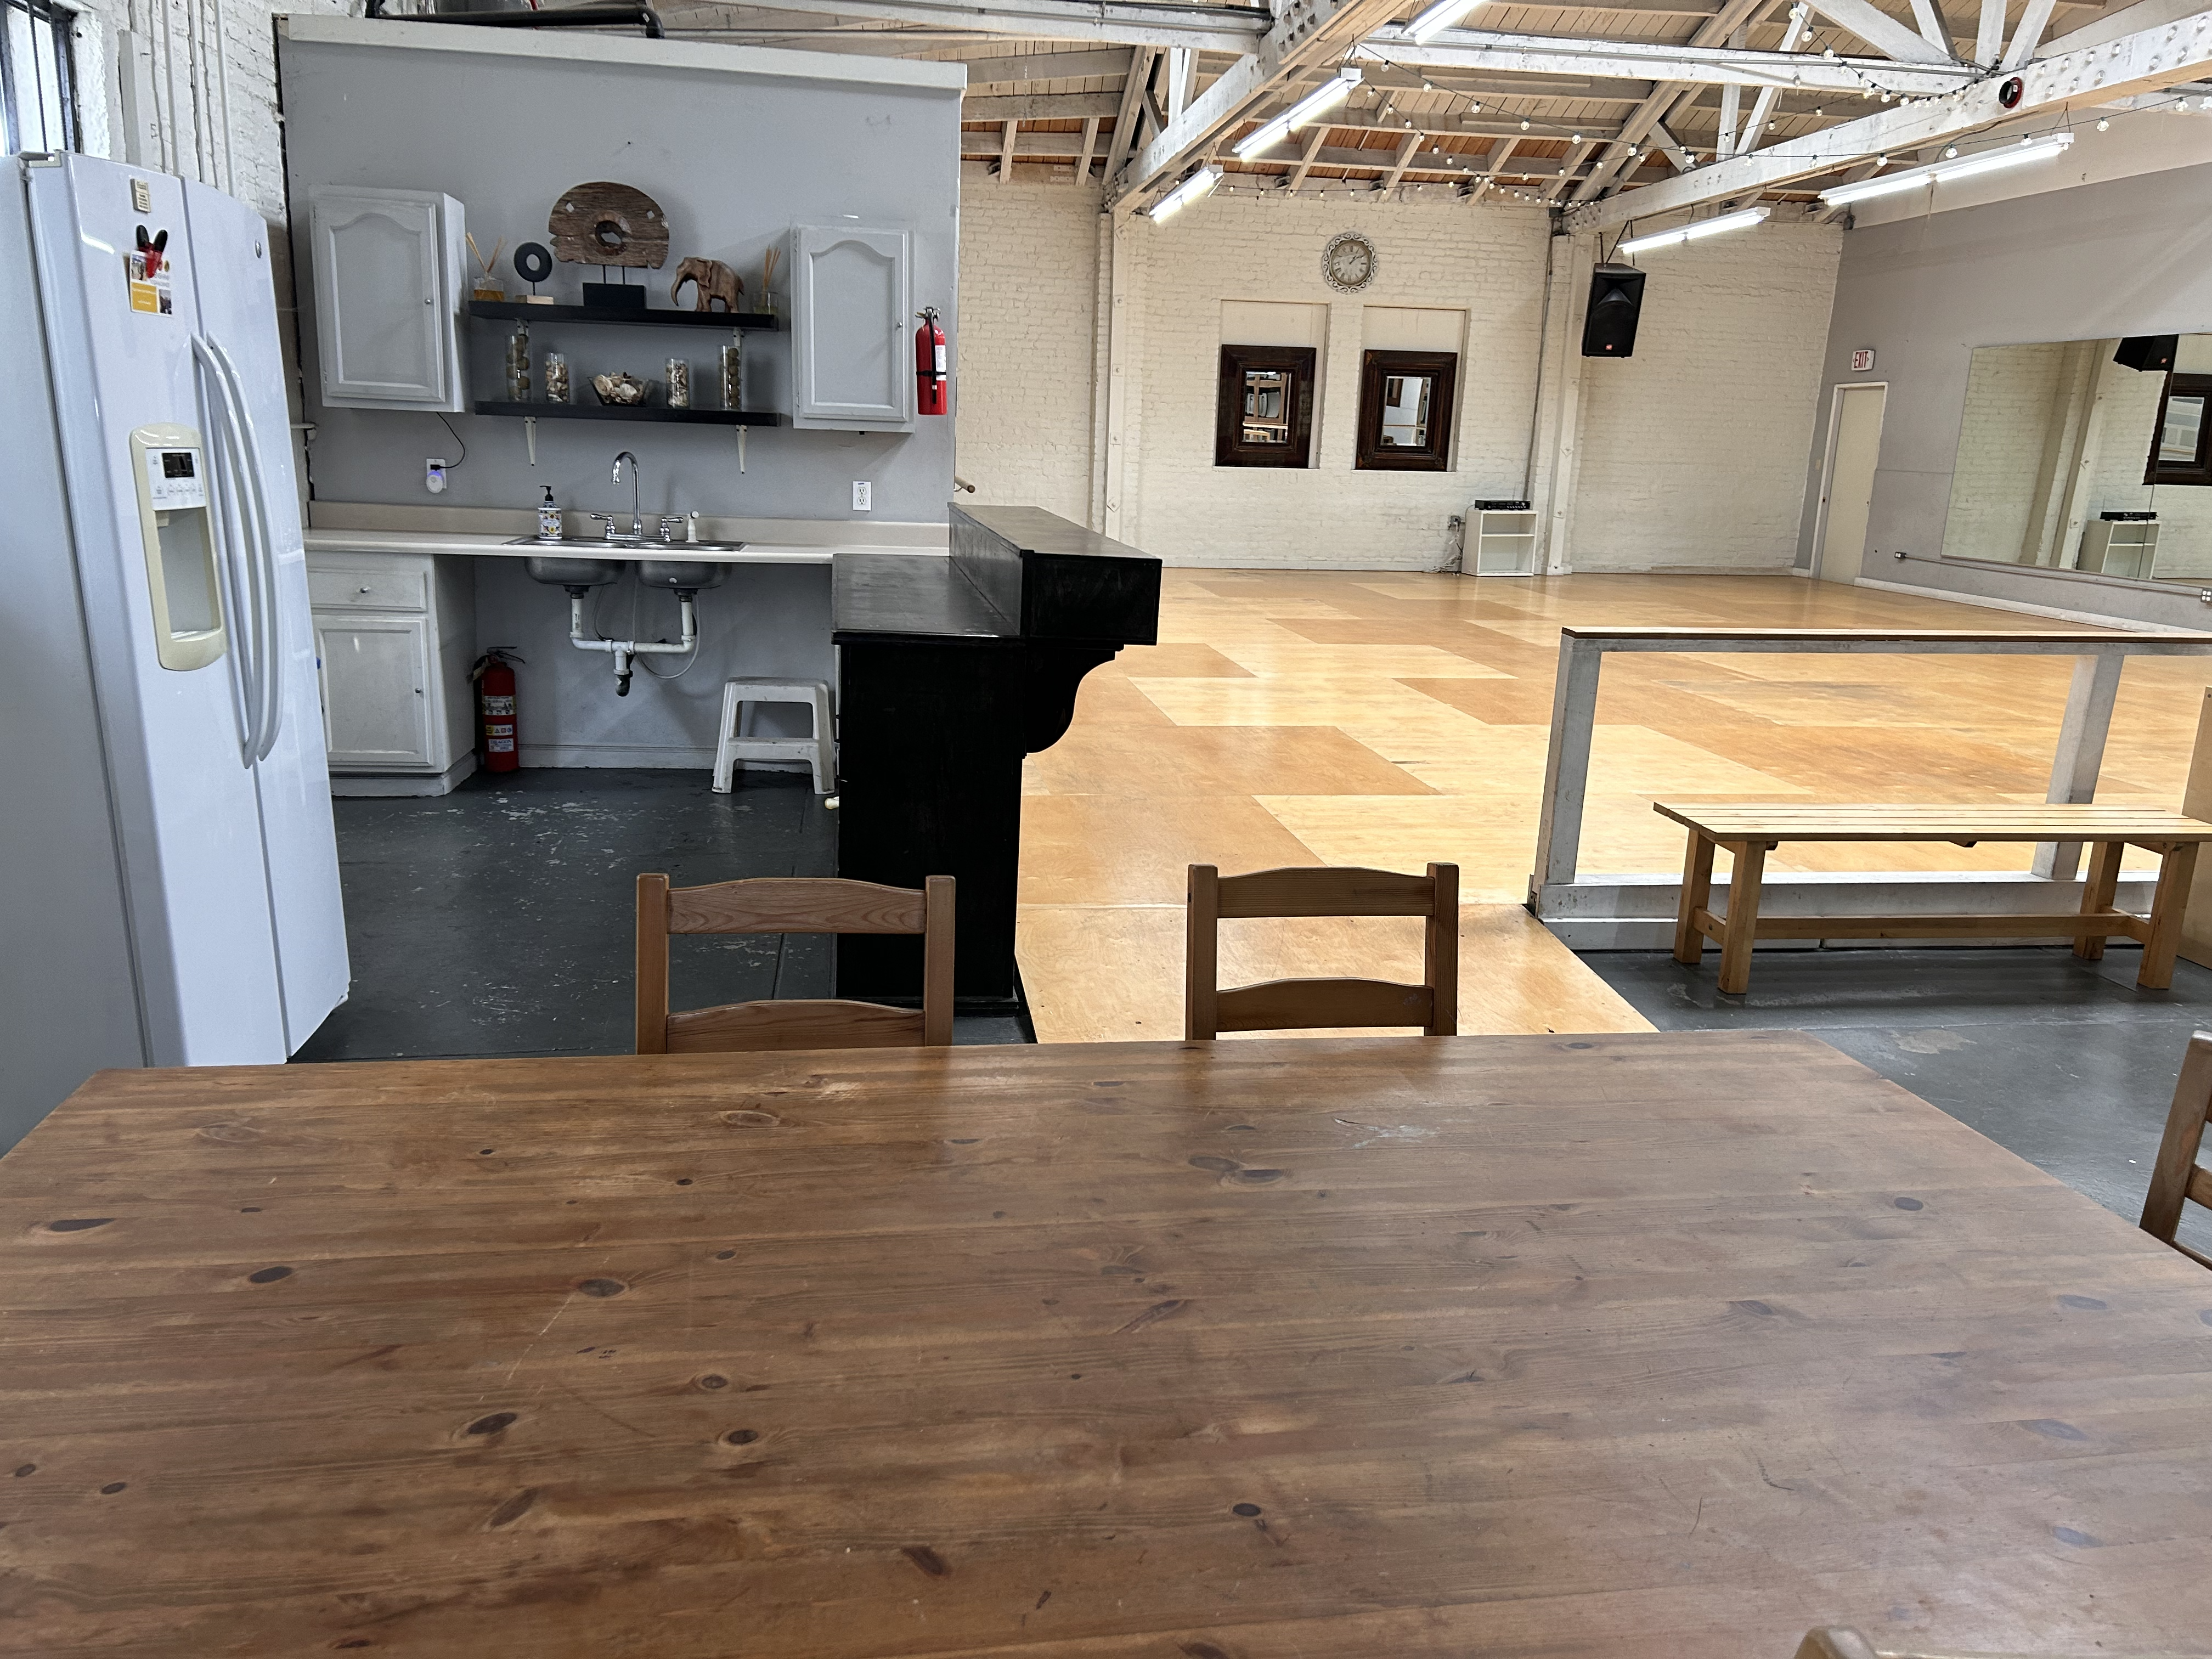 Studio B with kitchenette area